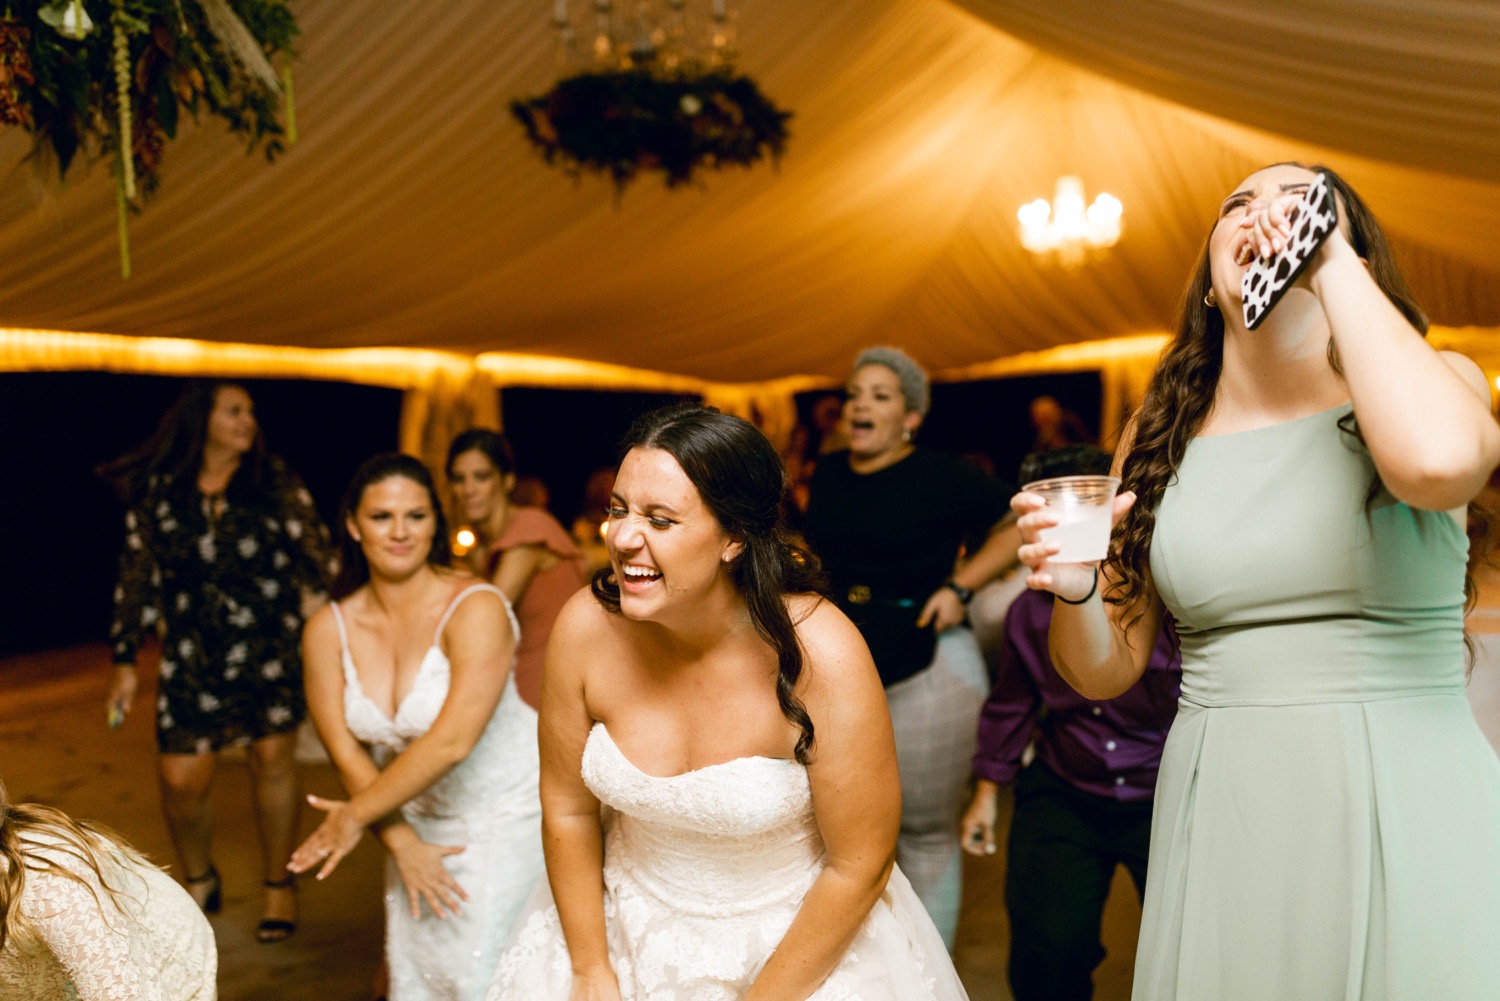 brides dancing and laughing at wedding reception